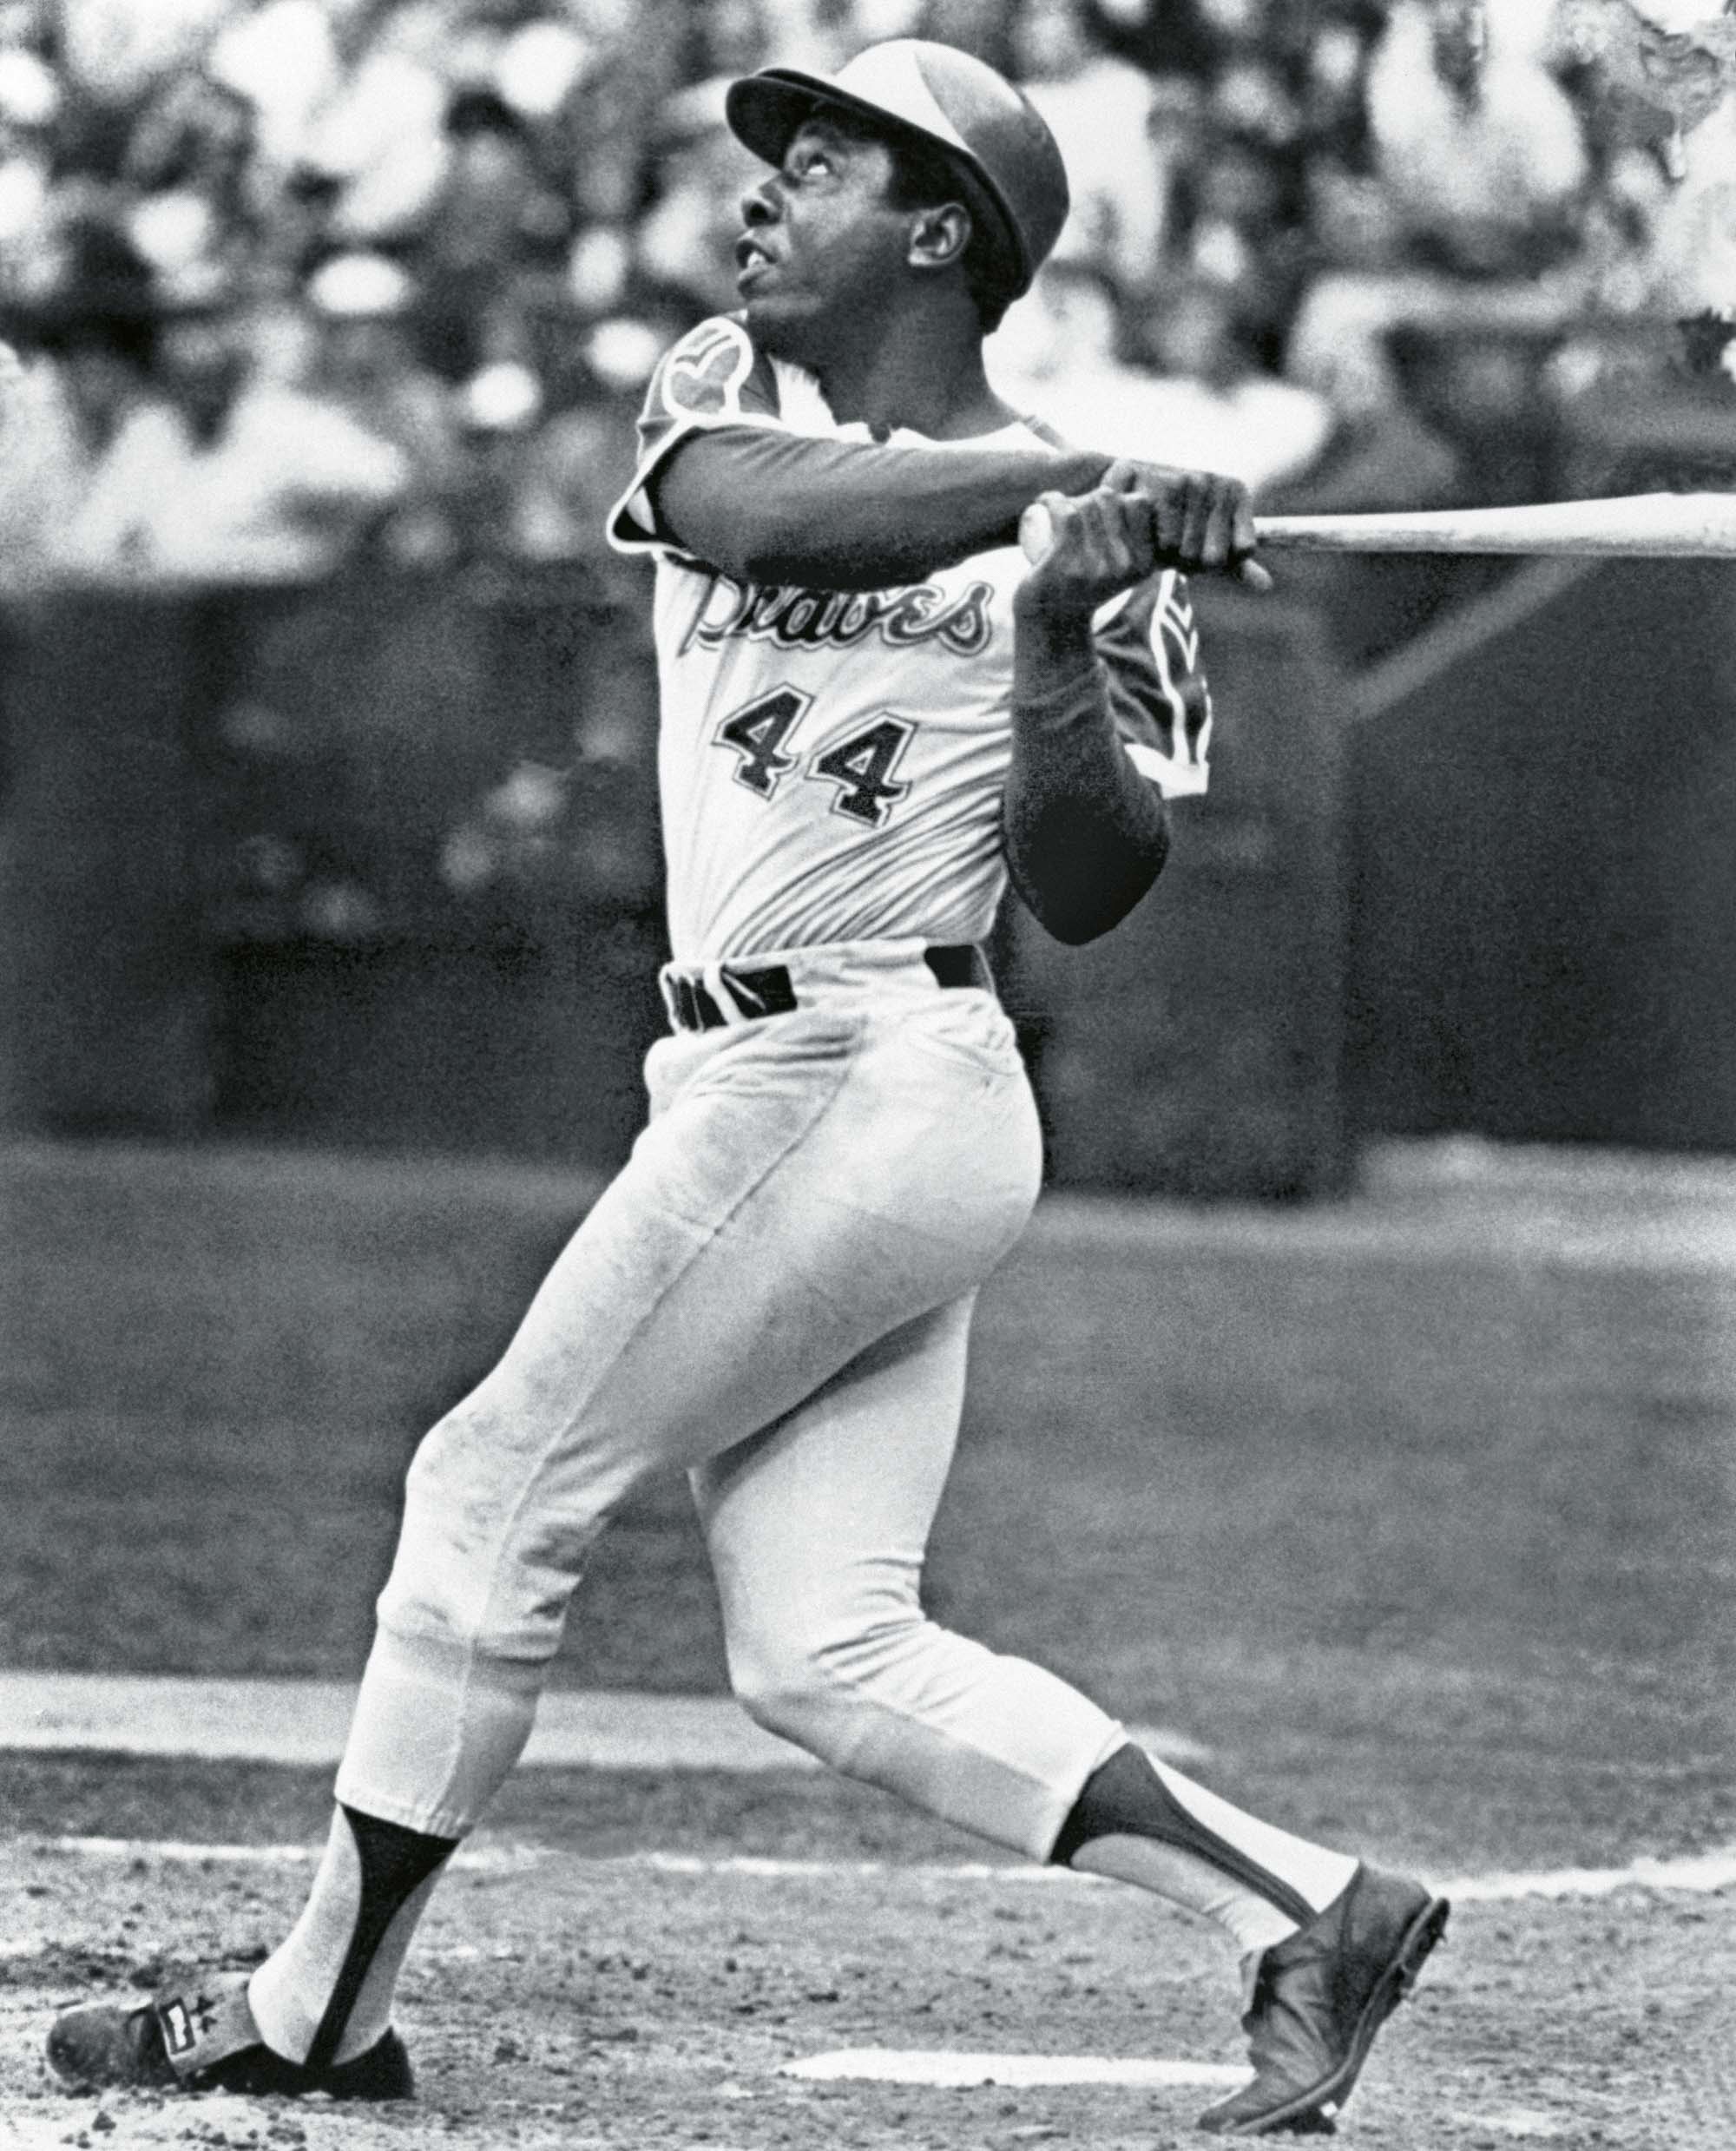 Report: Braves wearing 1974 throwback uniforms to honor Hank Aaron